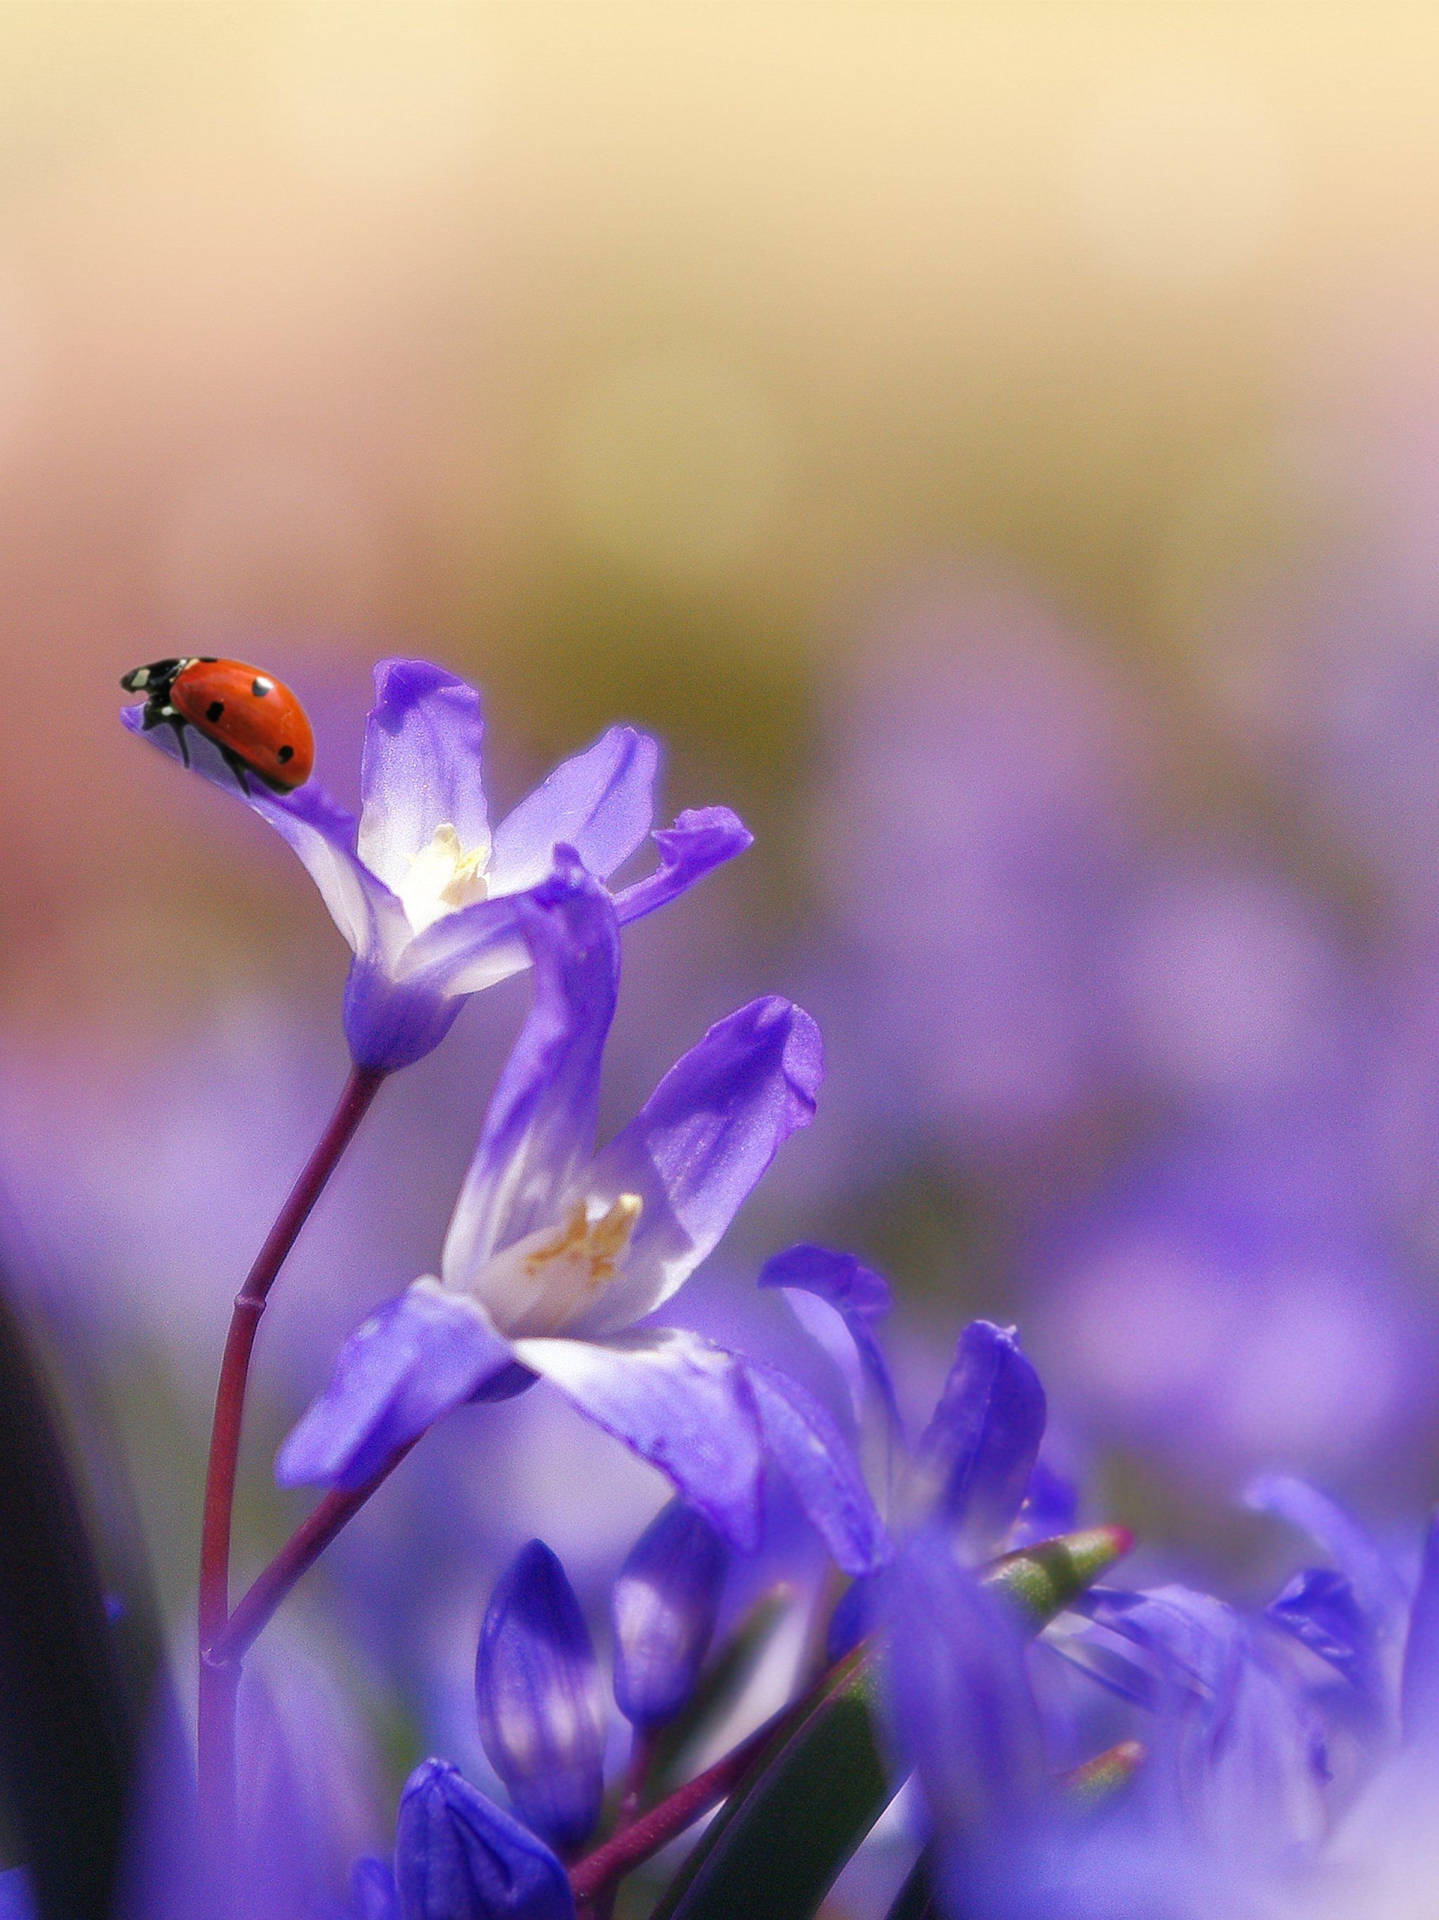 Ladybug On Saffron Crocus Flowers Picture